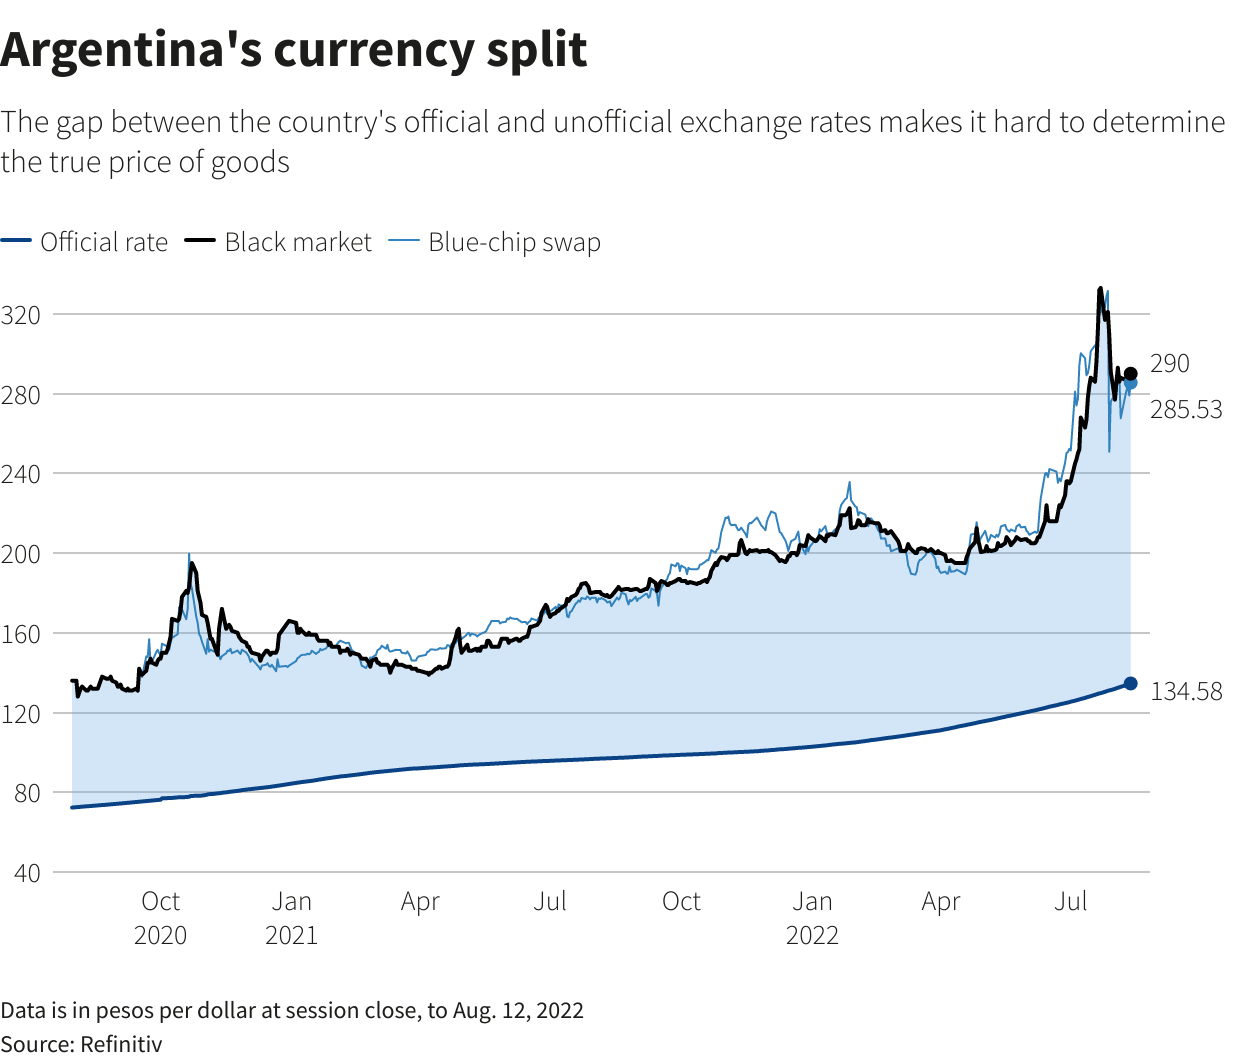 Argentina’s currency split